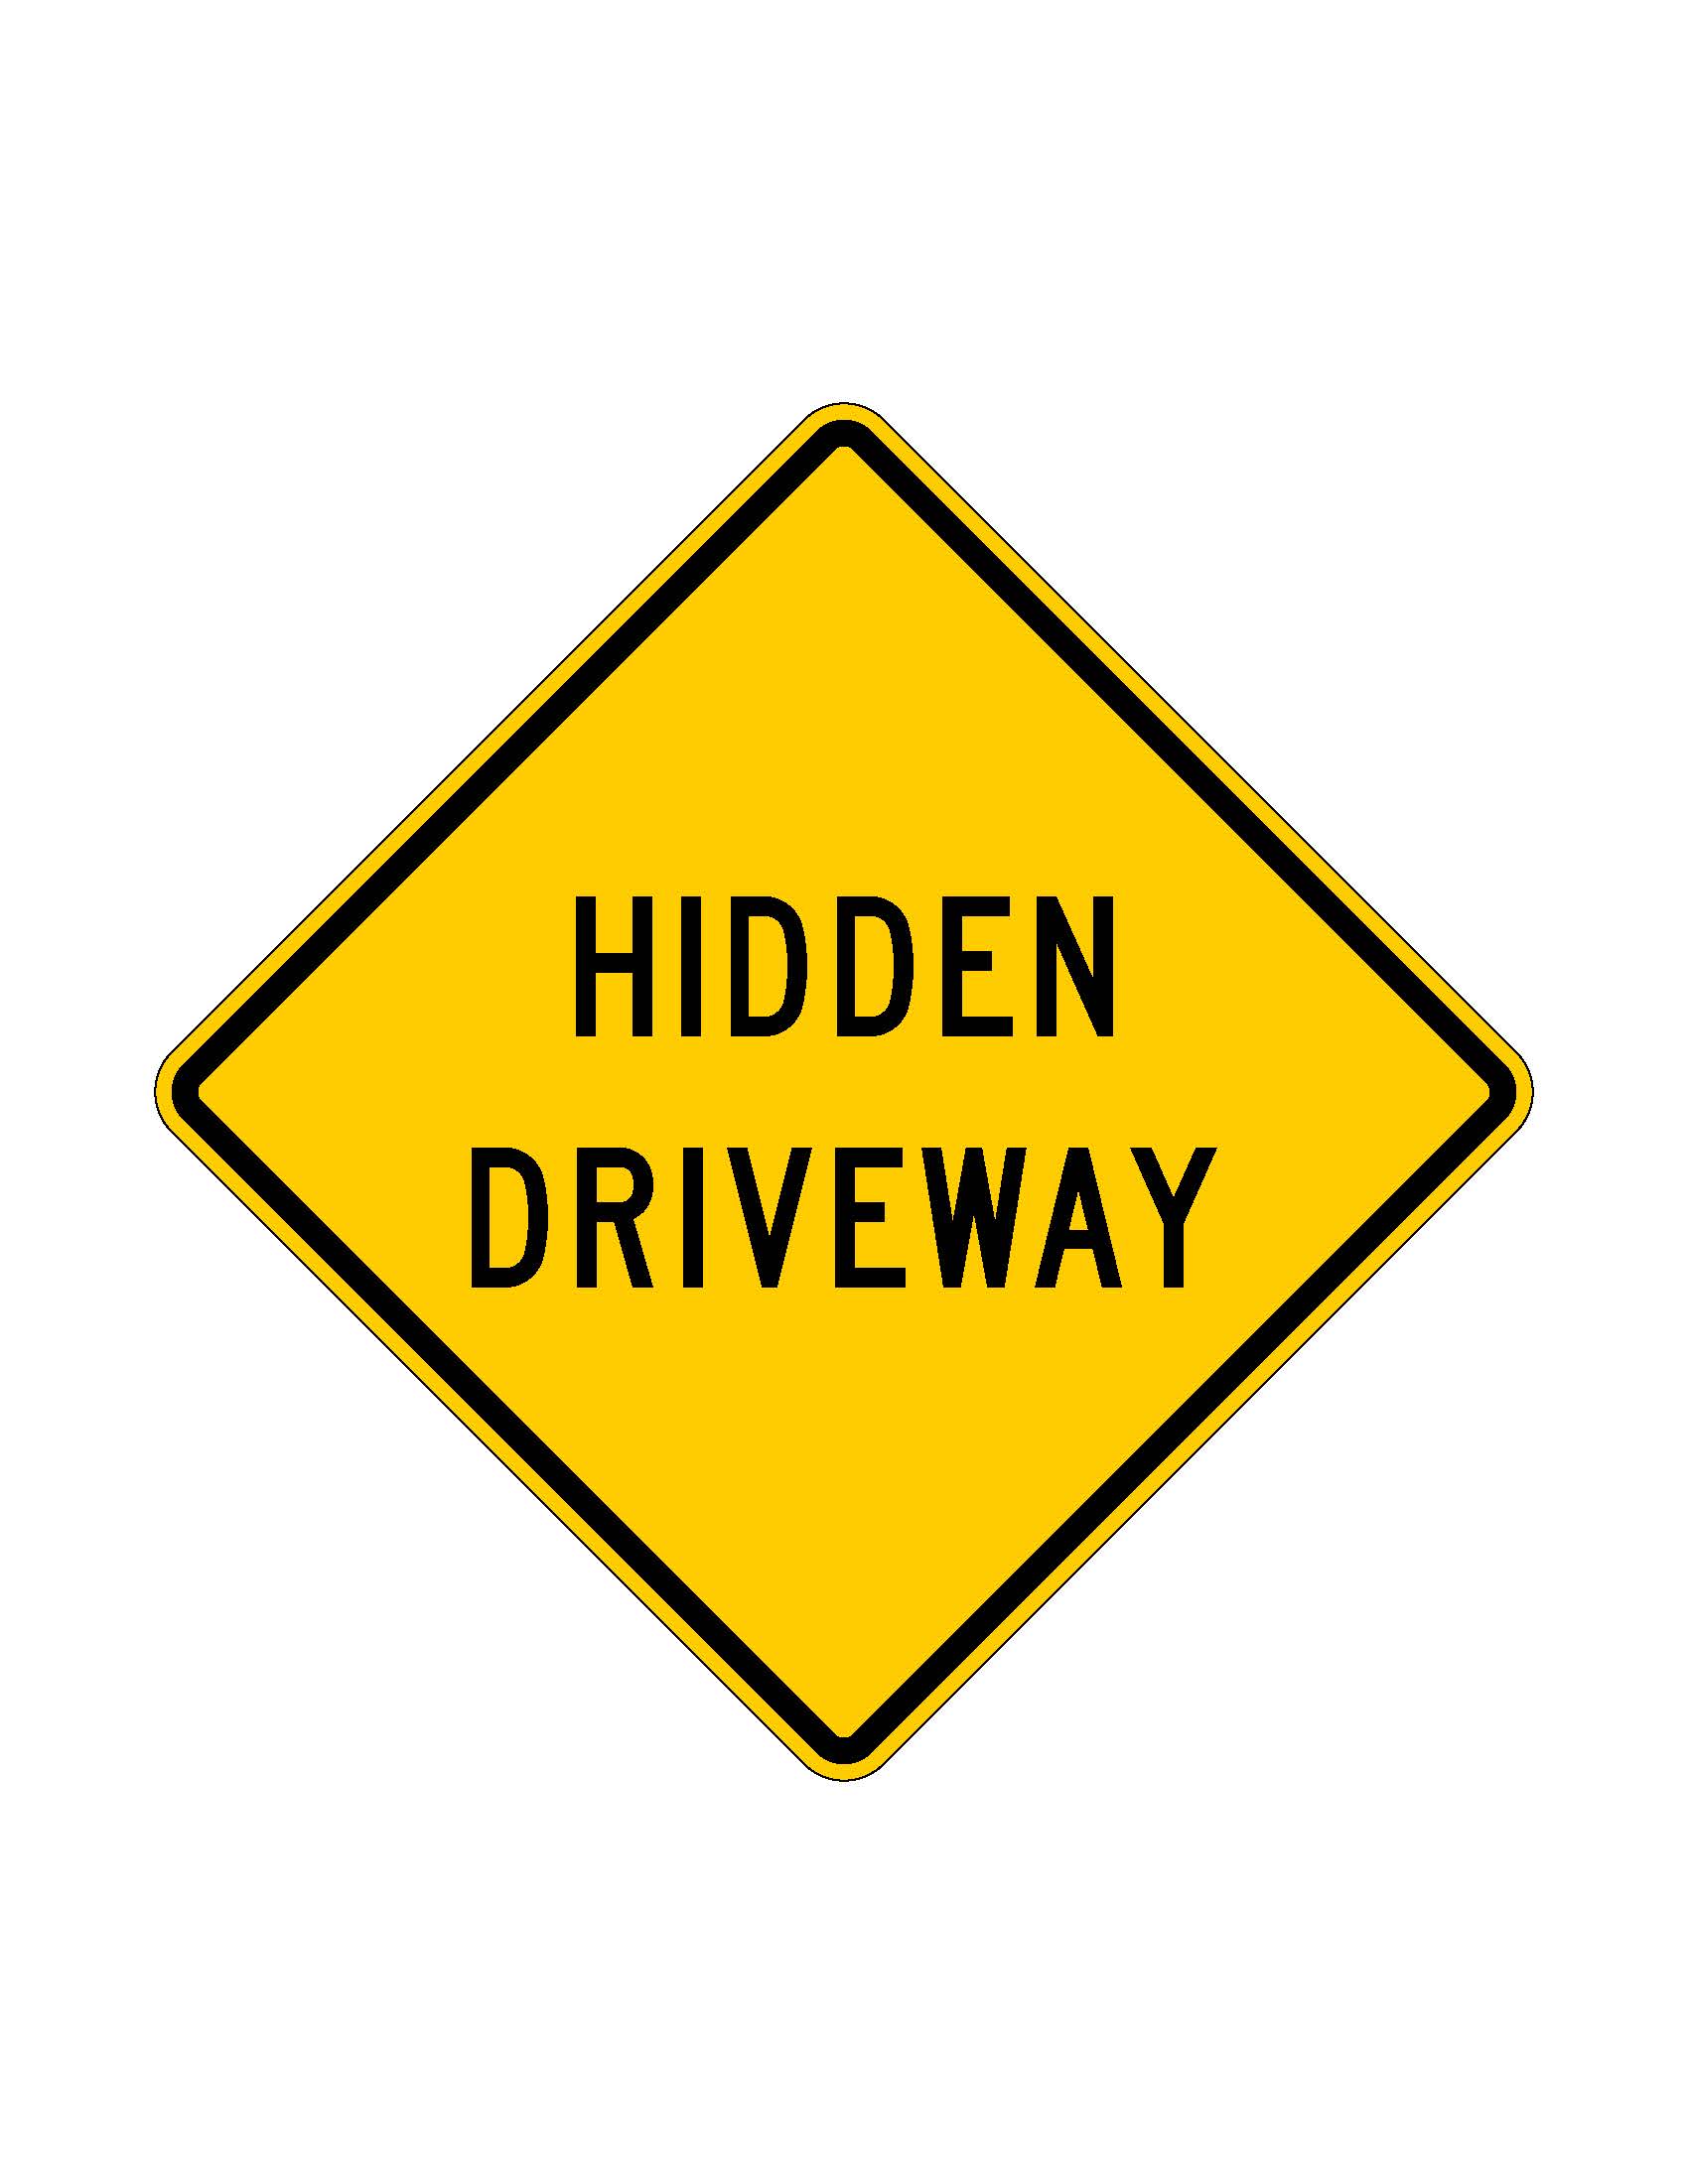 W2-50 Hidden Driveway.jpg detail image